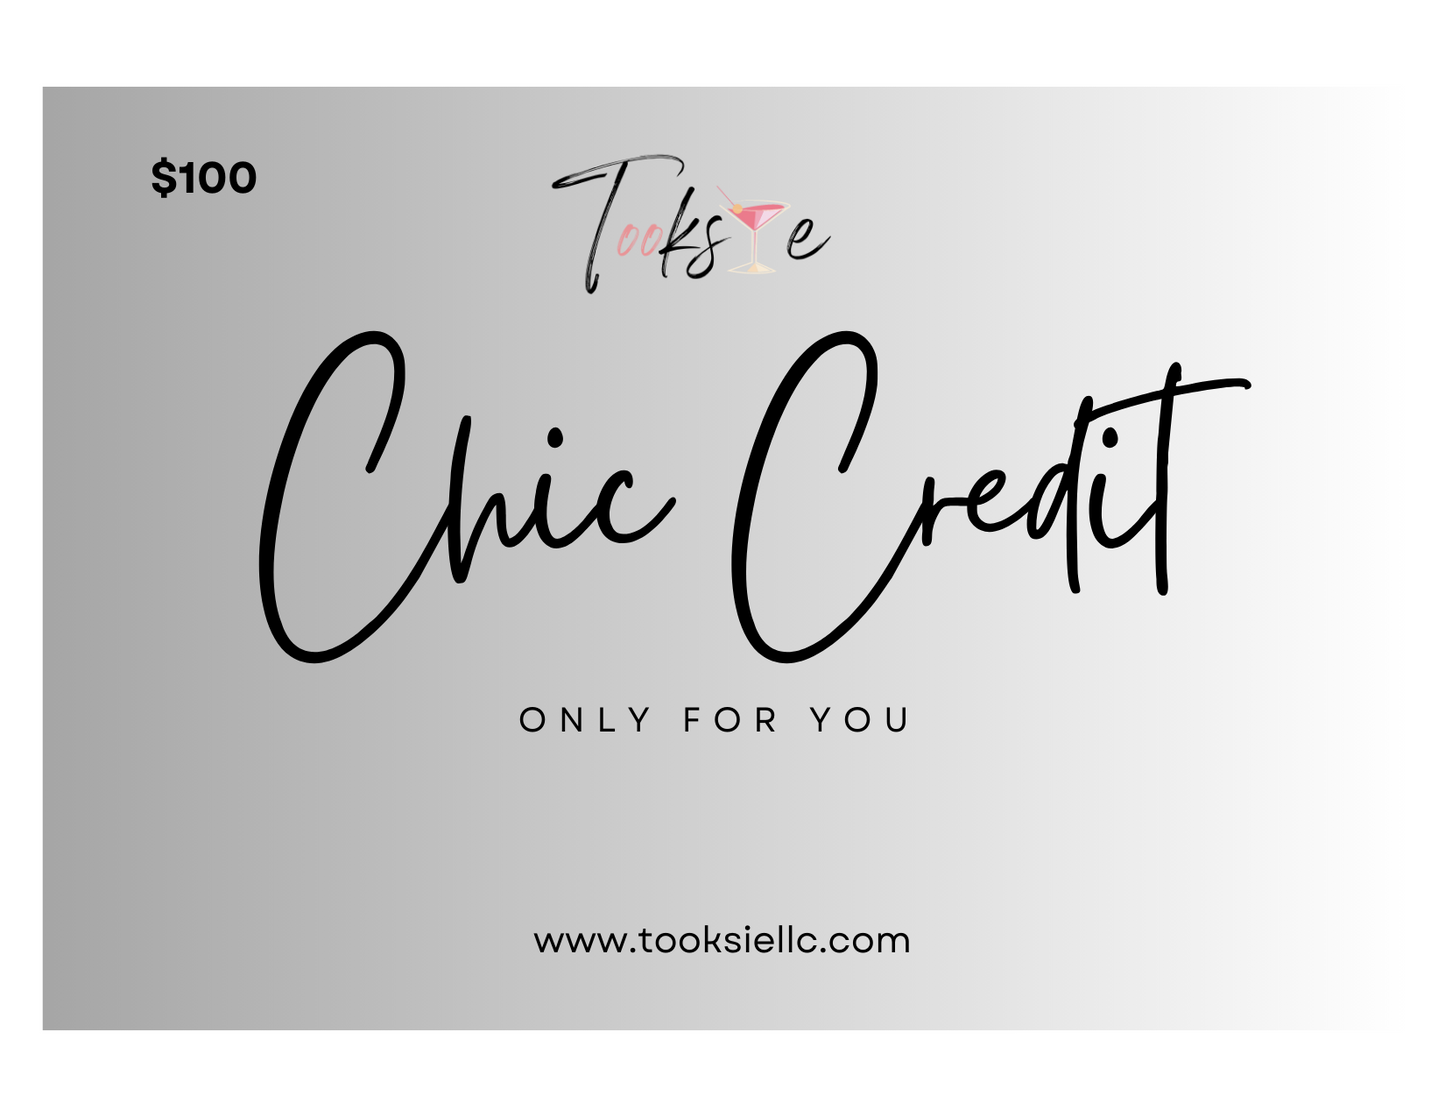 Tooksie ChicCredit - Premium simple from Tooksie - Just $10! Shop now at Tooksie